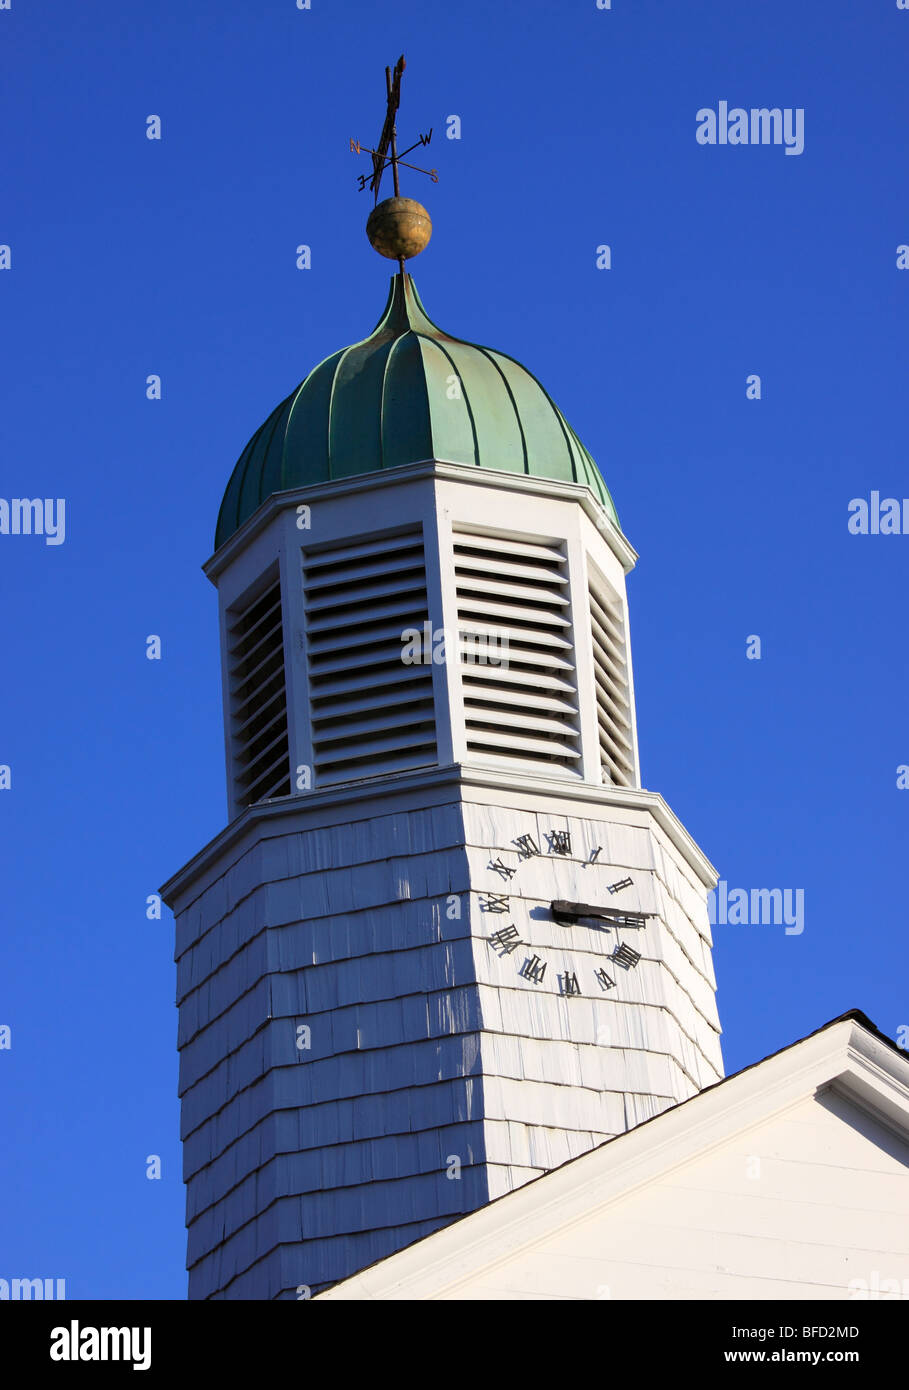 Weathe Vane und Clock tower auf Postamt, Stony Brook, Long Island, NY Stockfoto